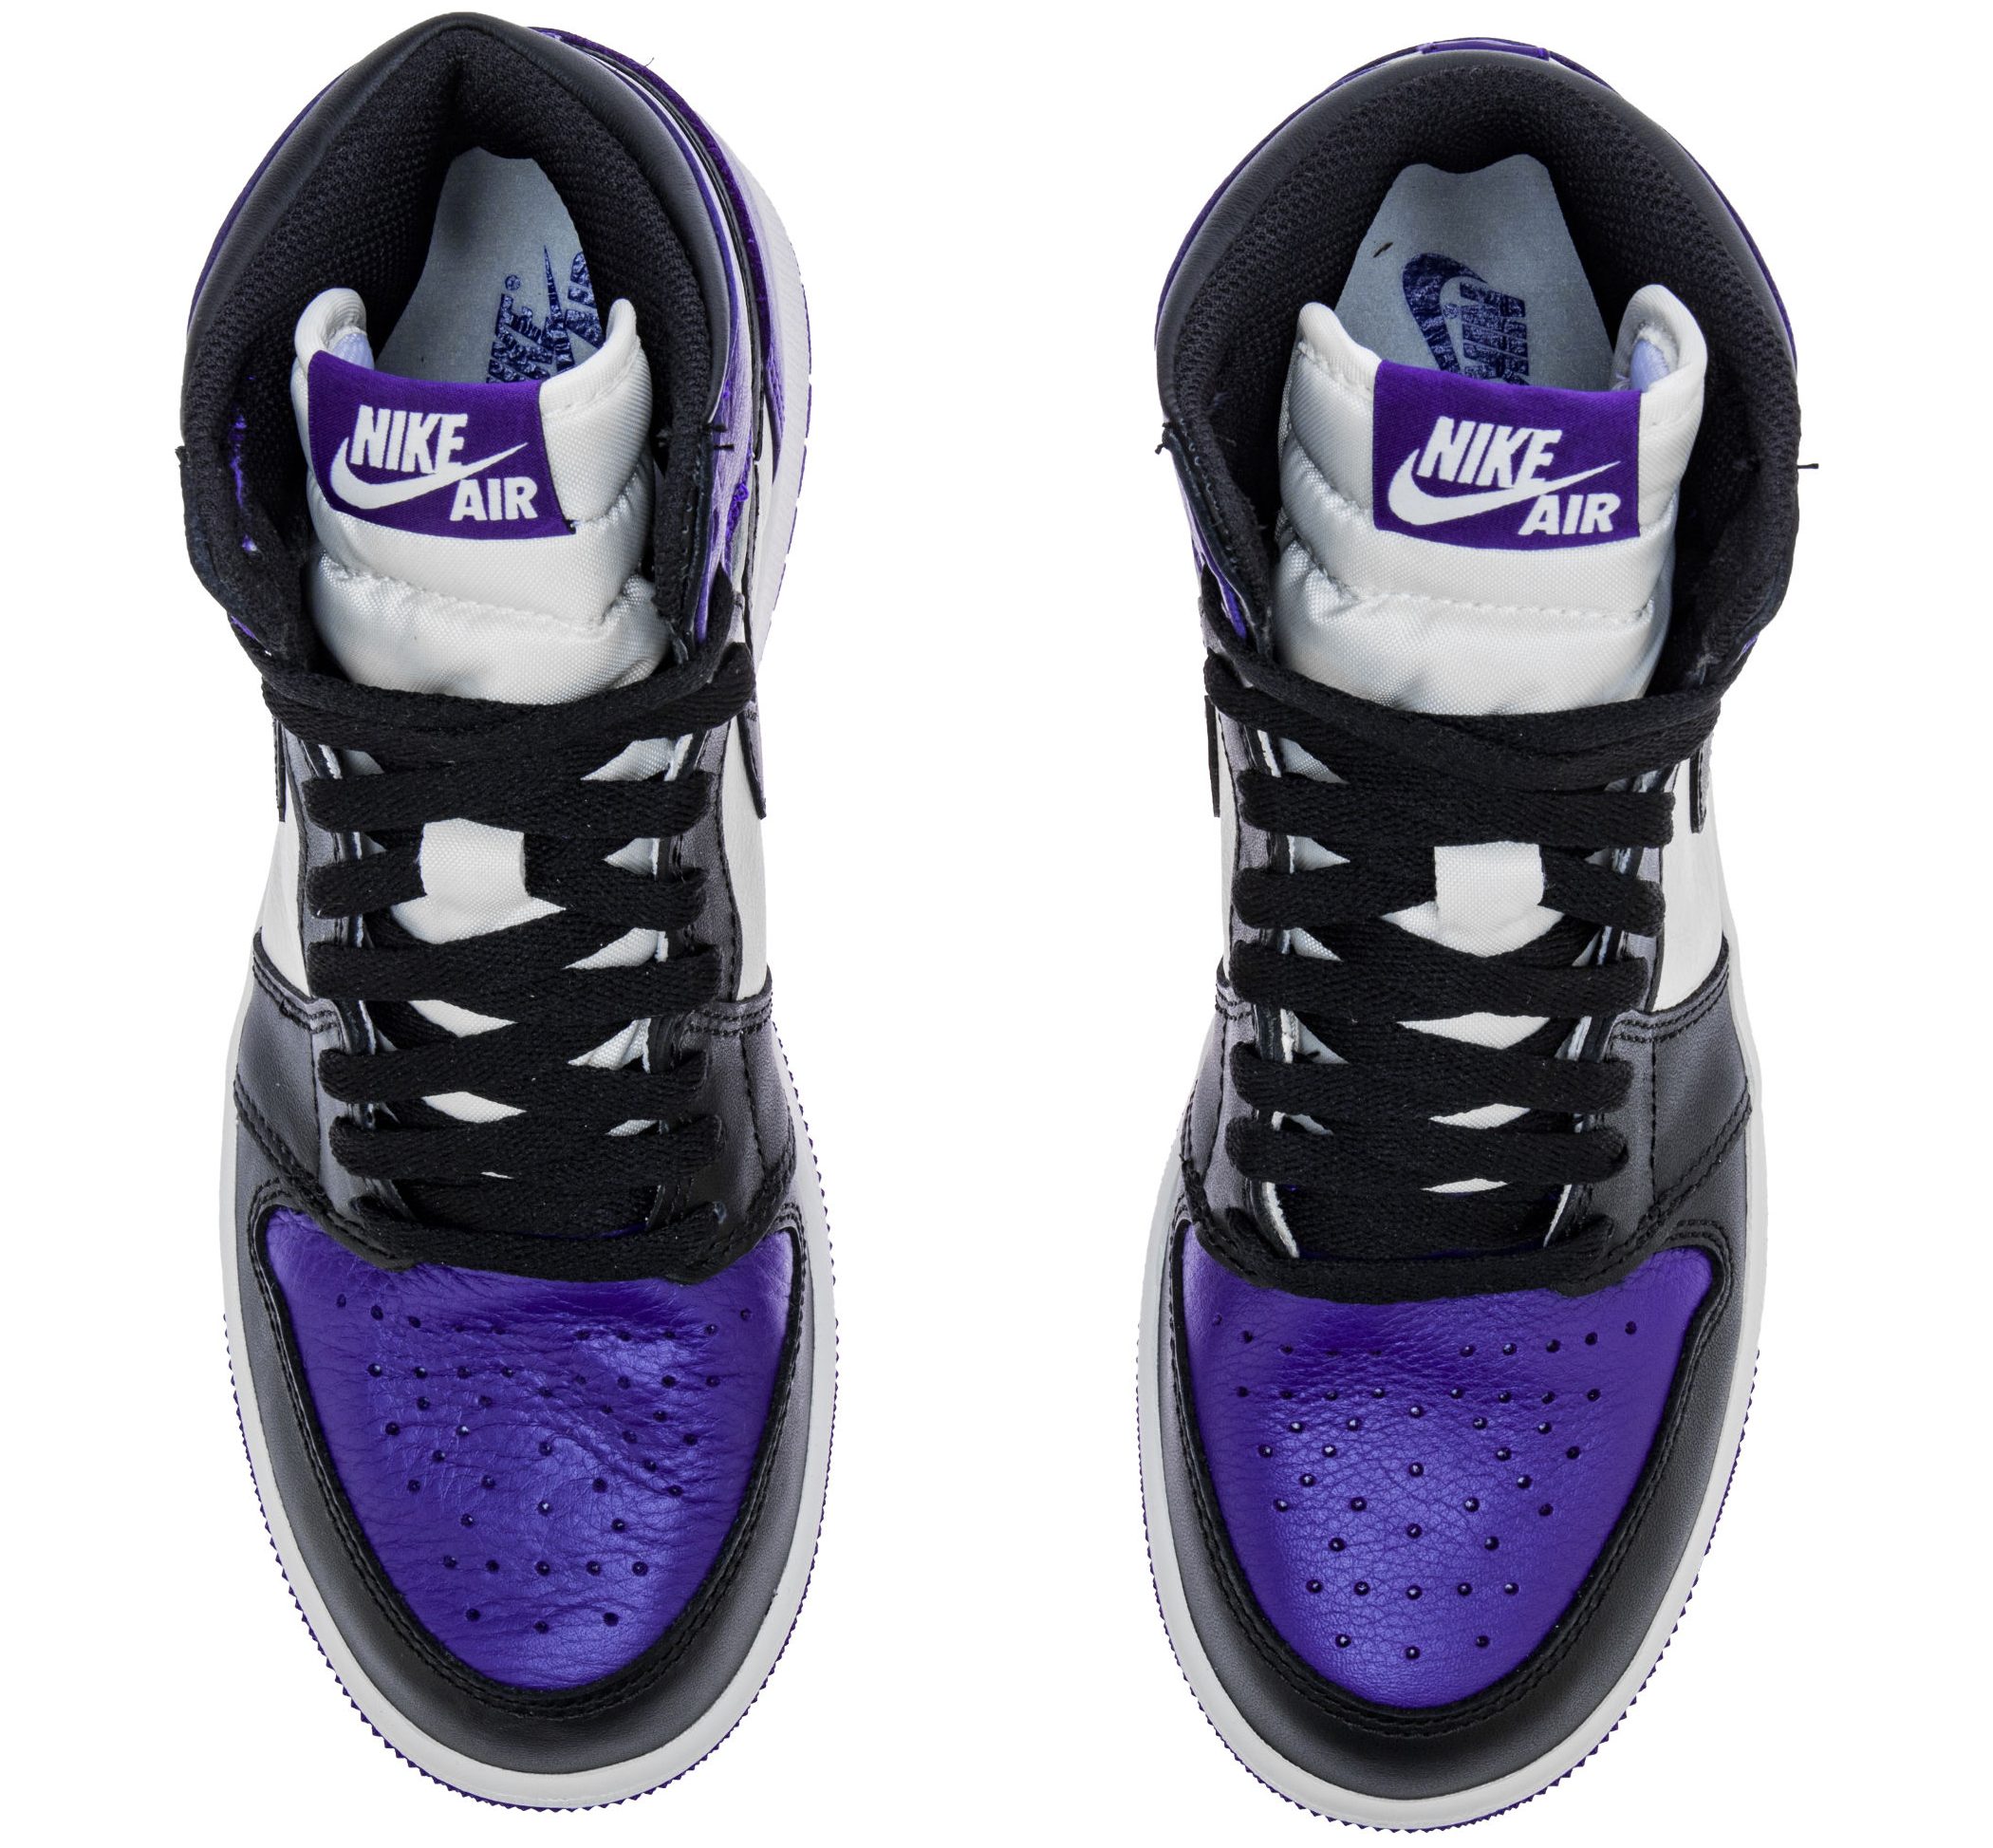 court purple aj1